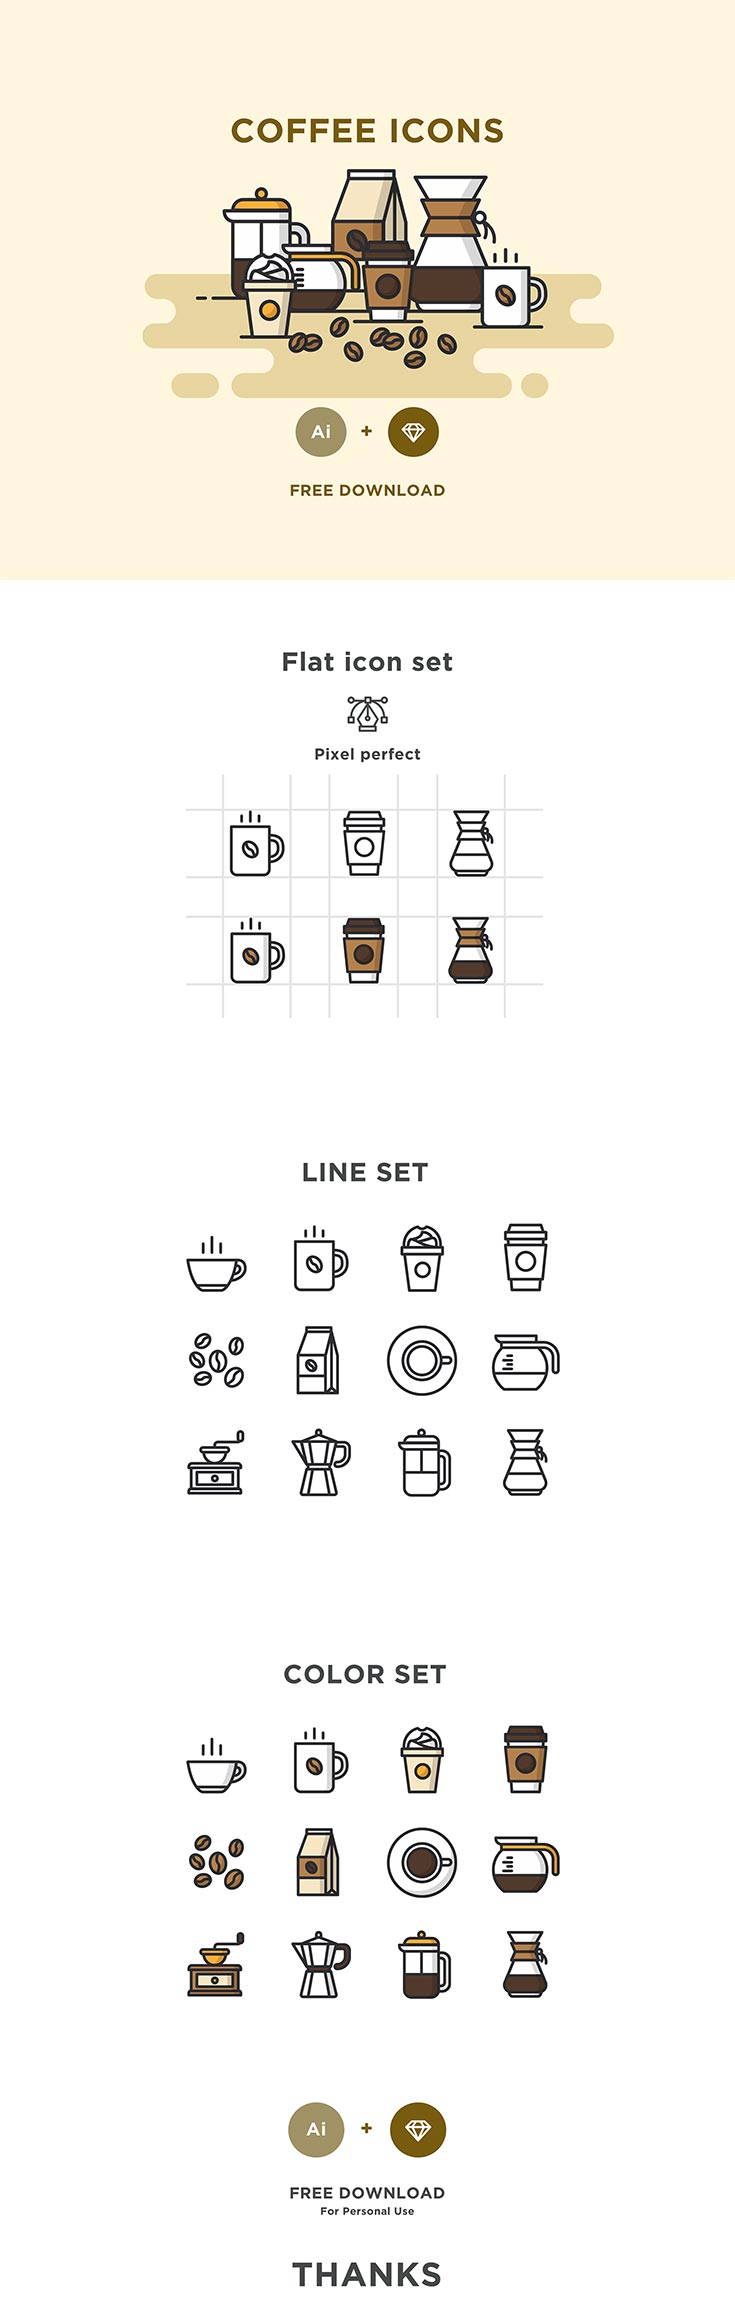 Free Coffee Icons